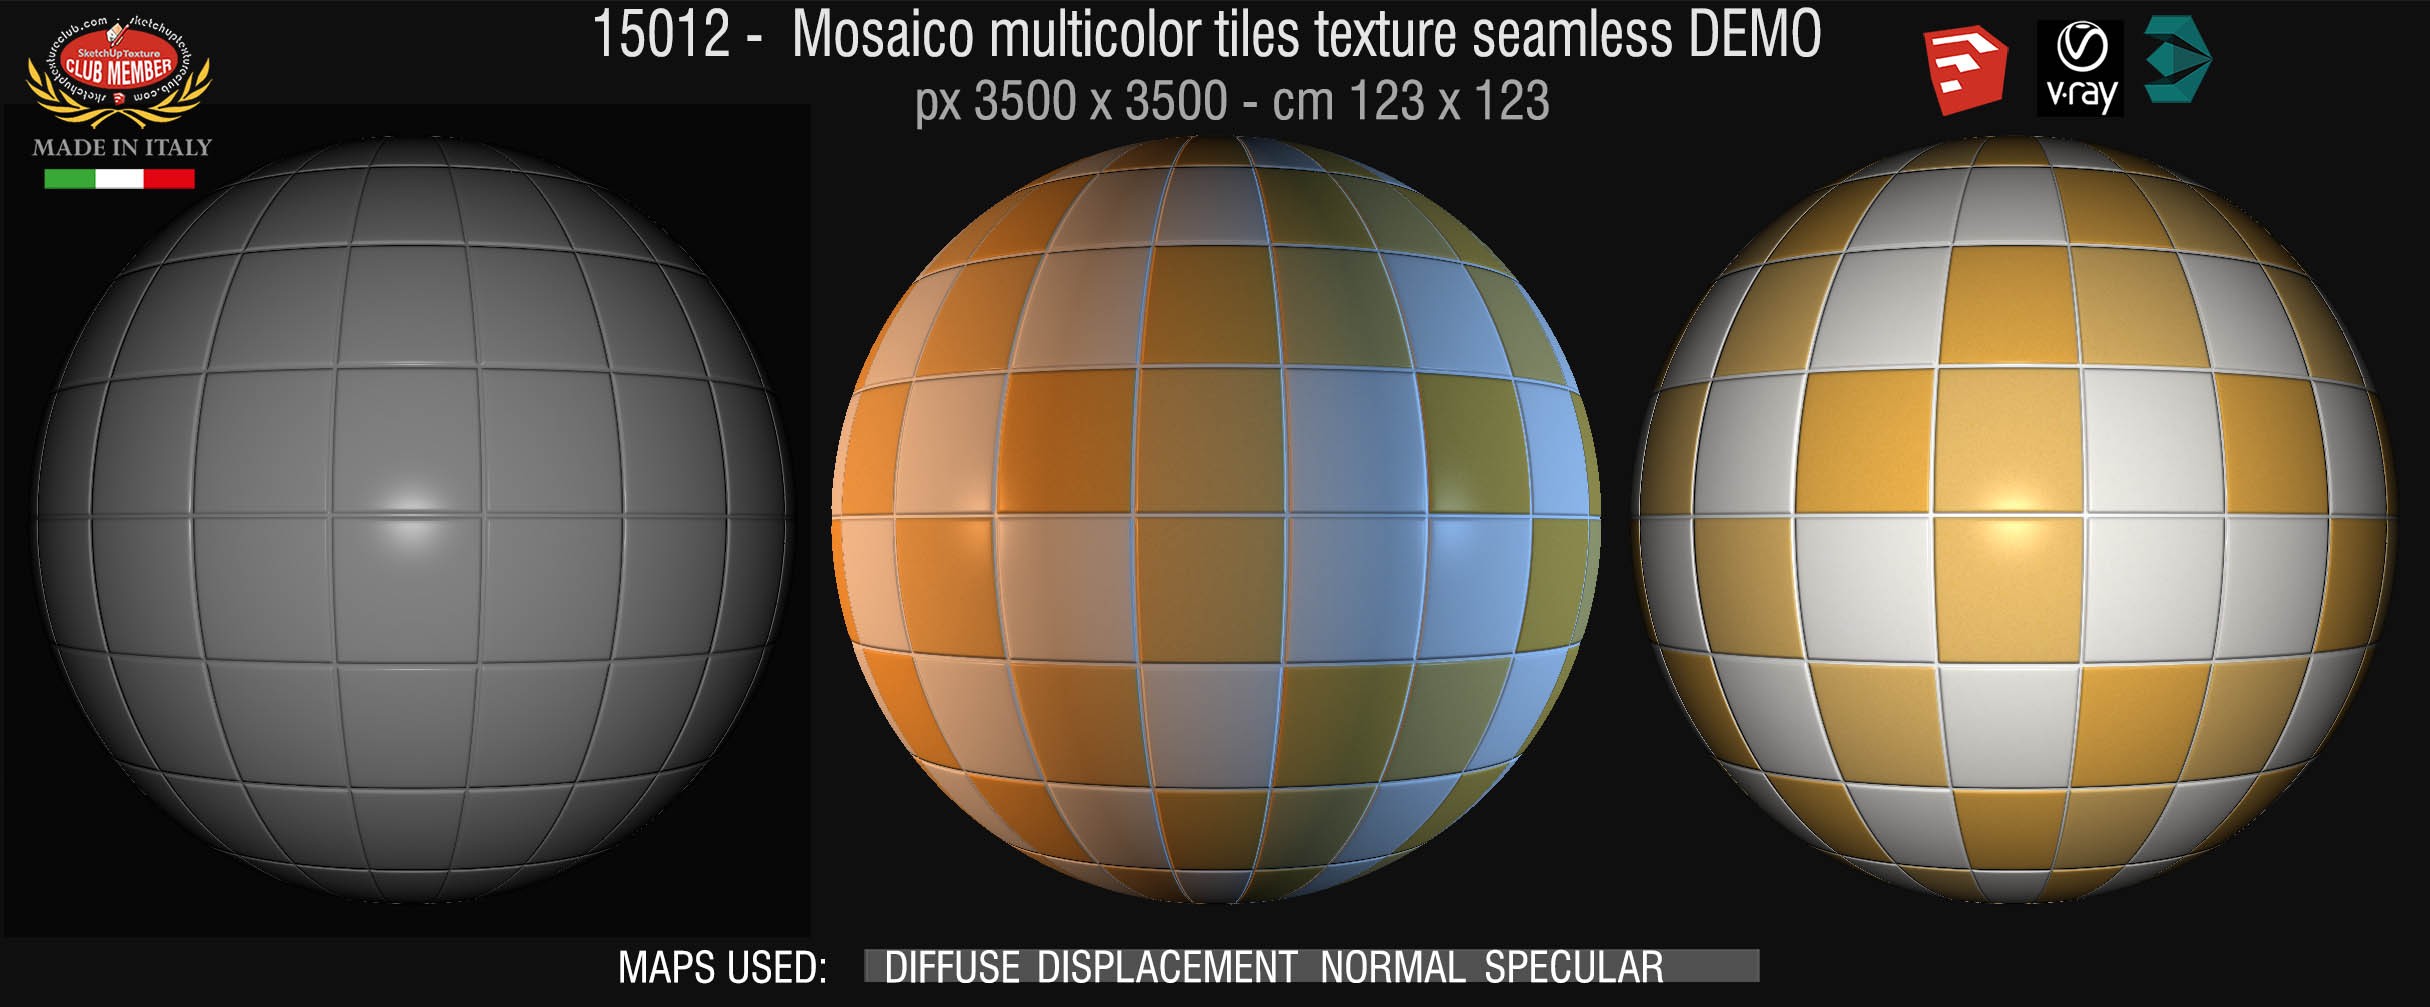 15012 Mosaico multicolor tiles texture seamless + maps DEMO